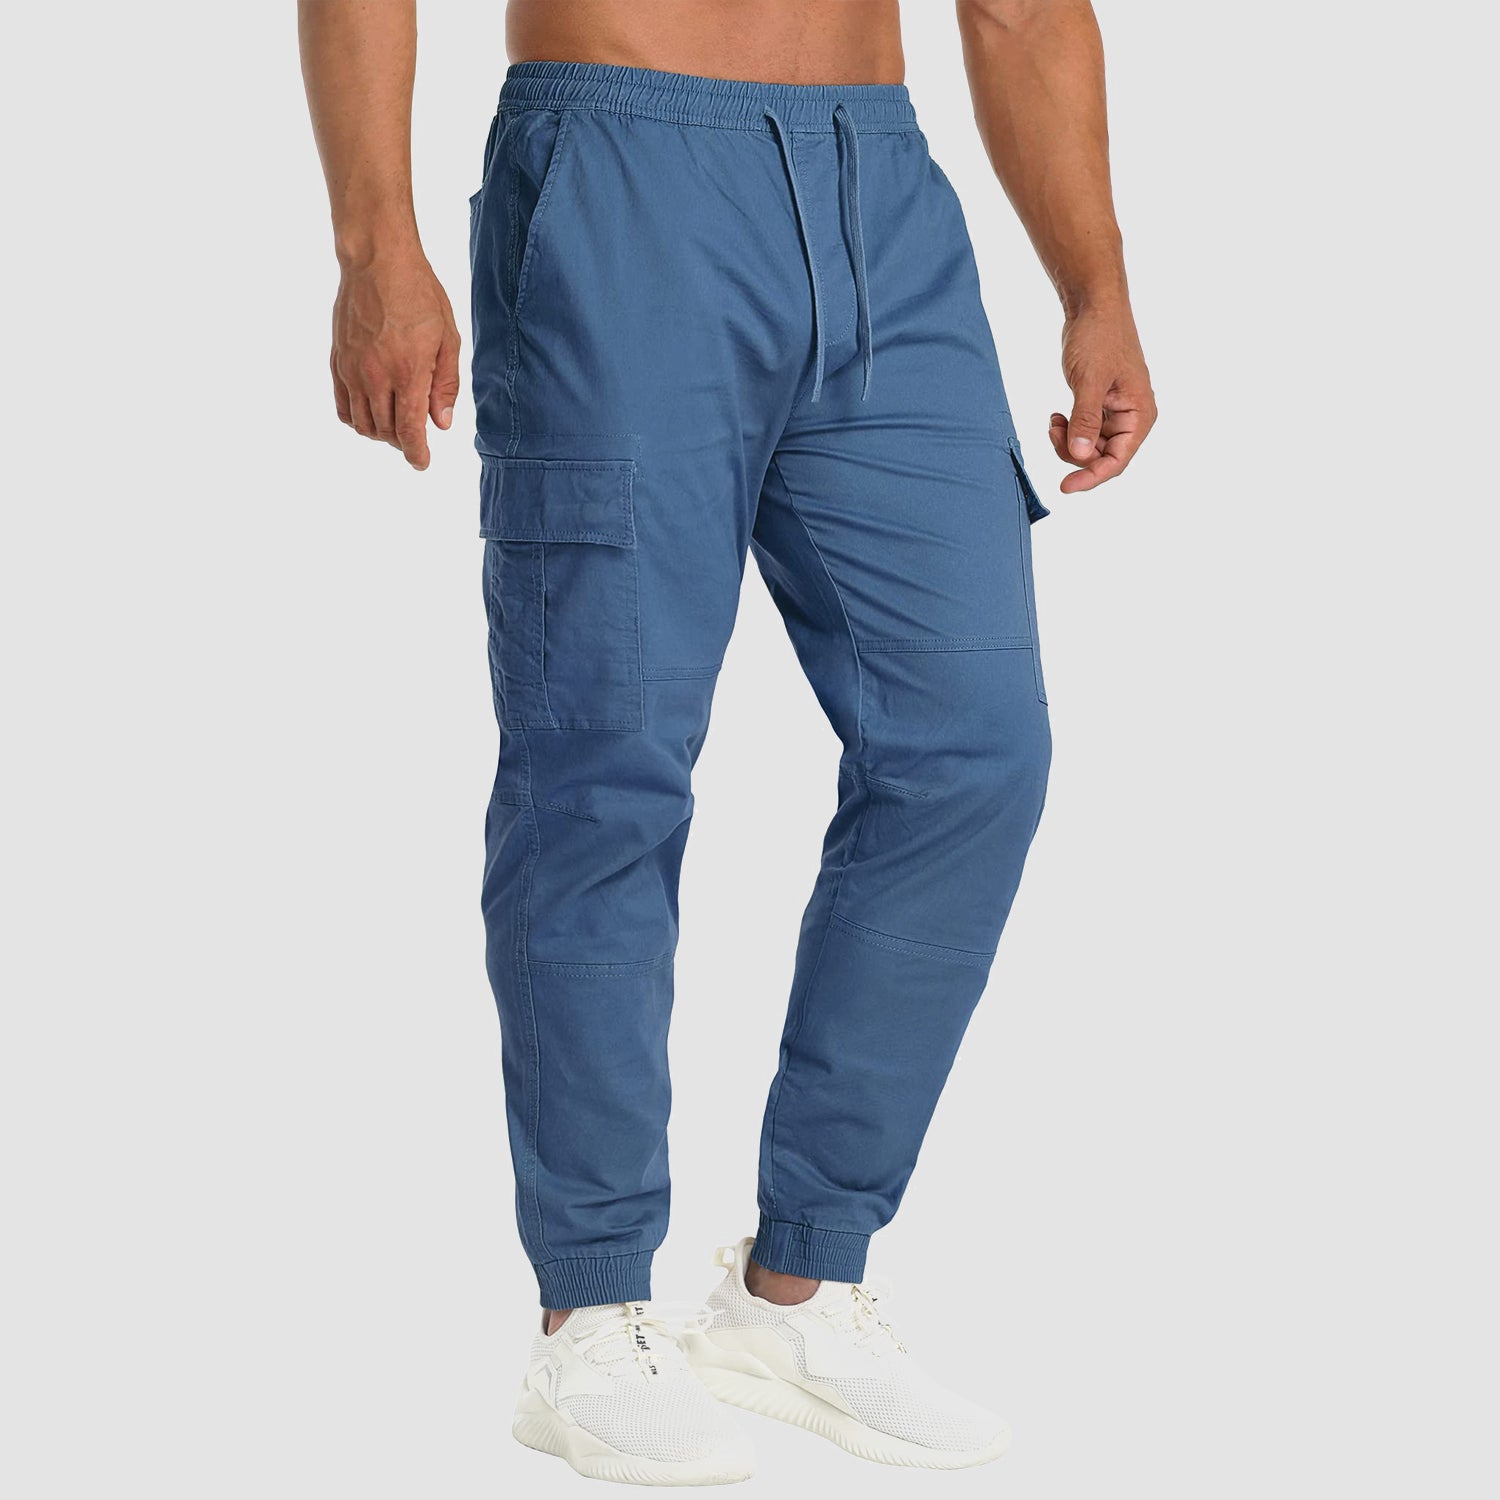 Men's Cargo Pants Elastic Waist Quick Dry Trousers, Brick Red / 36